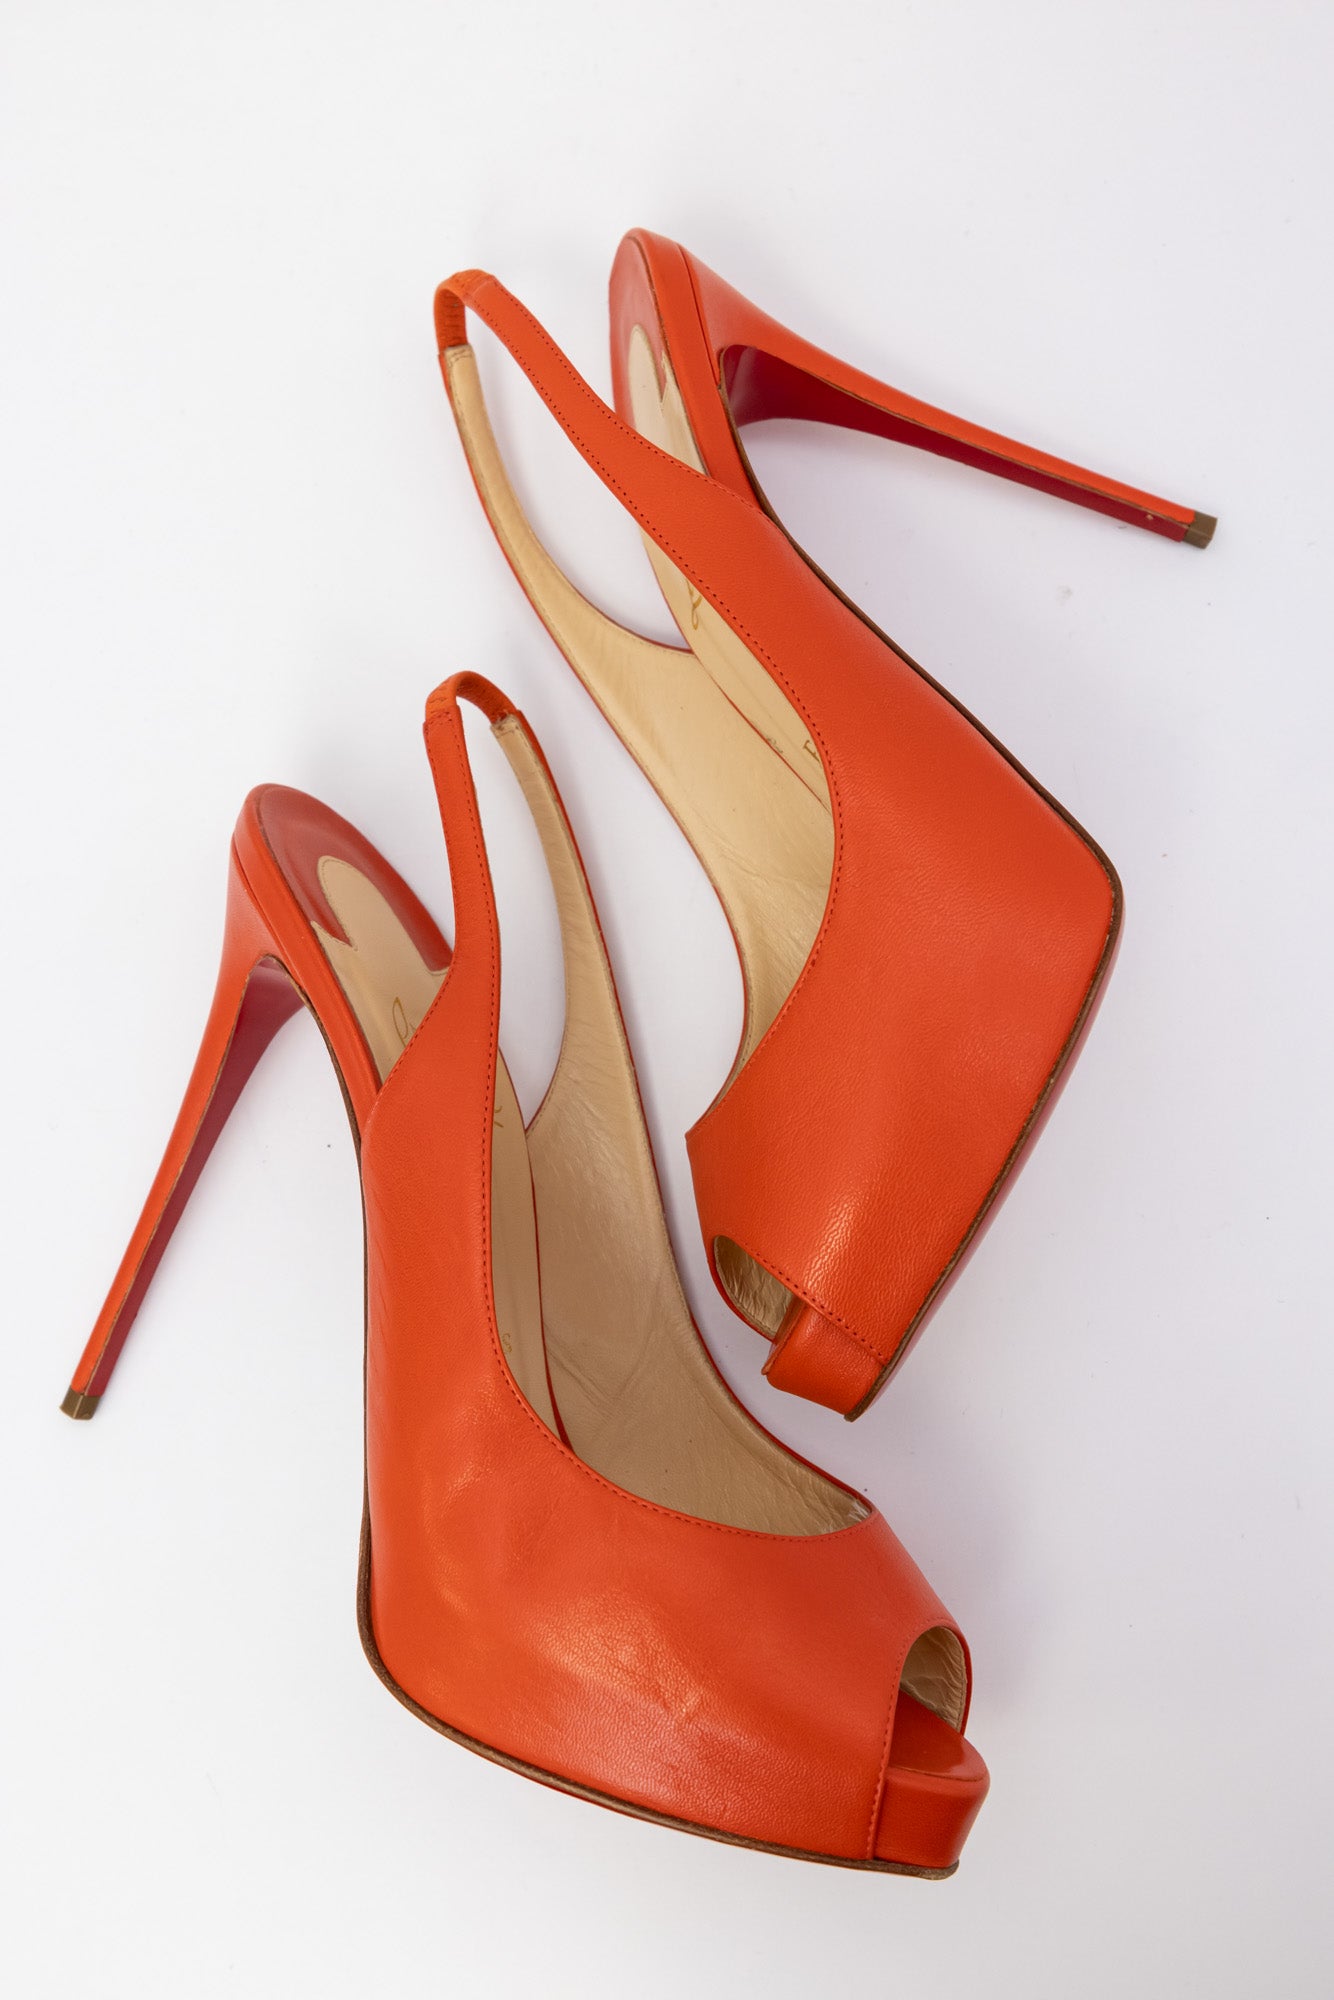 CHRISTIAN LOUBOUTIN  Orange Leather Sling-back Pumps Heels Shoes